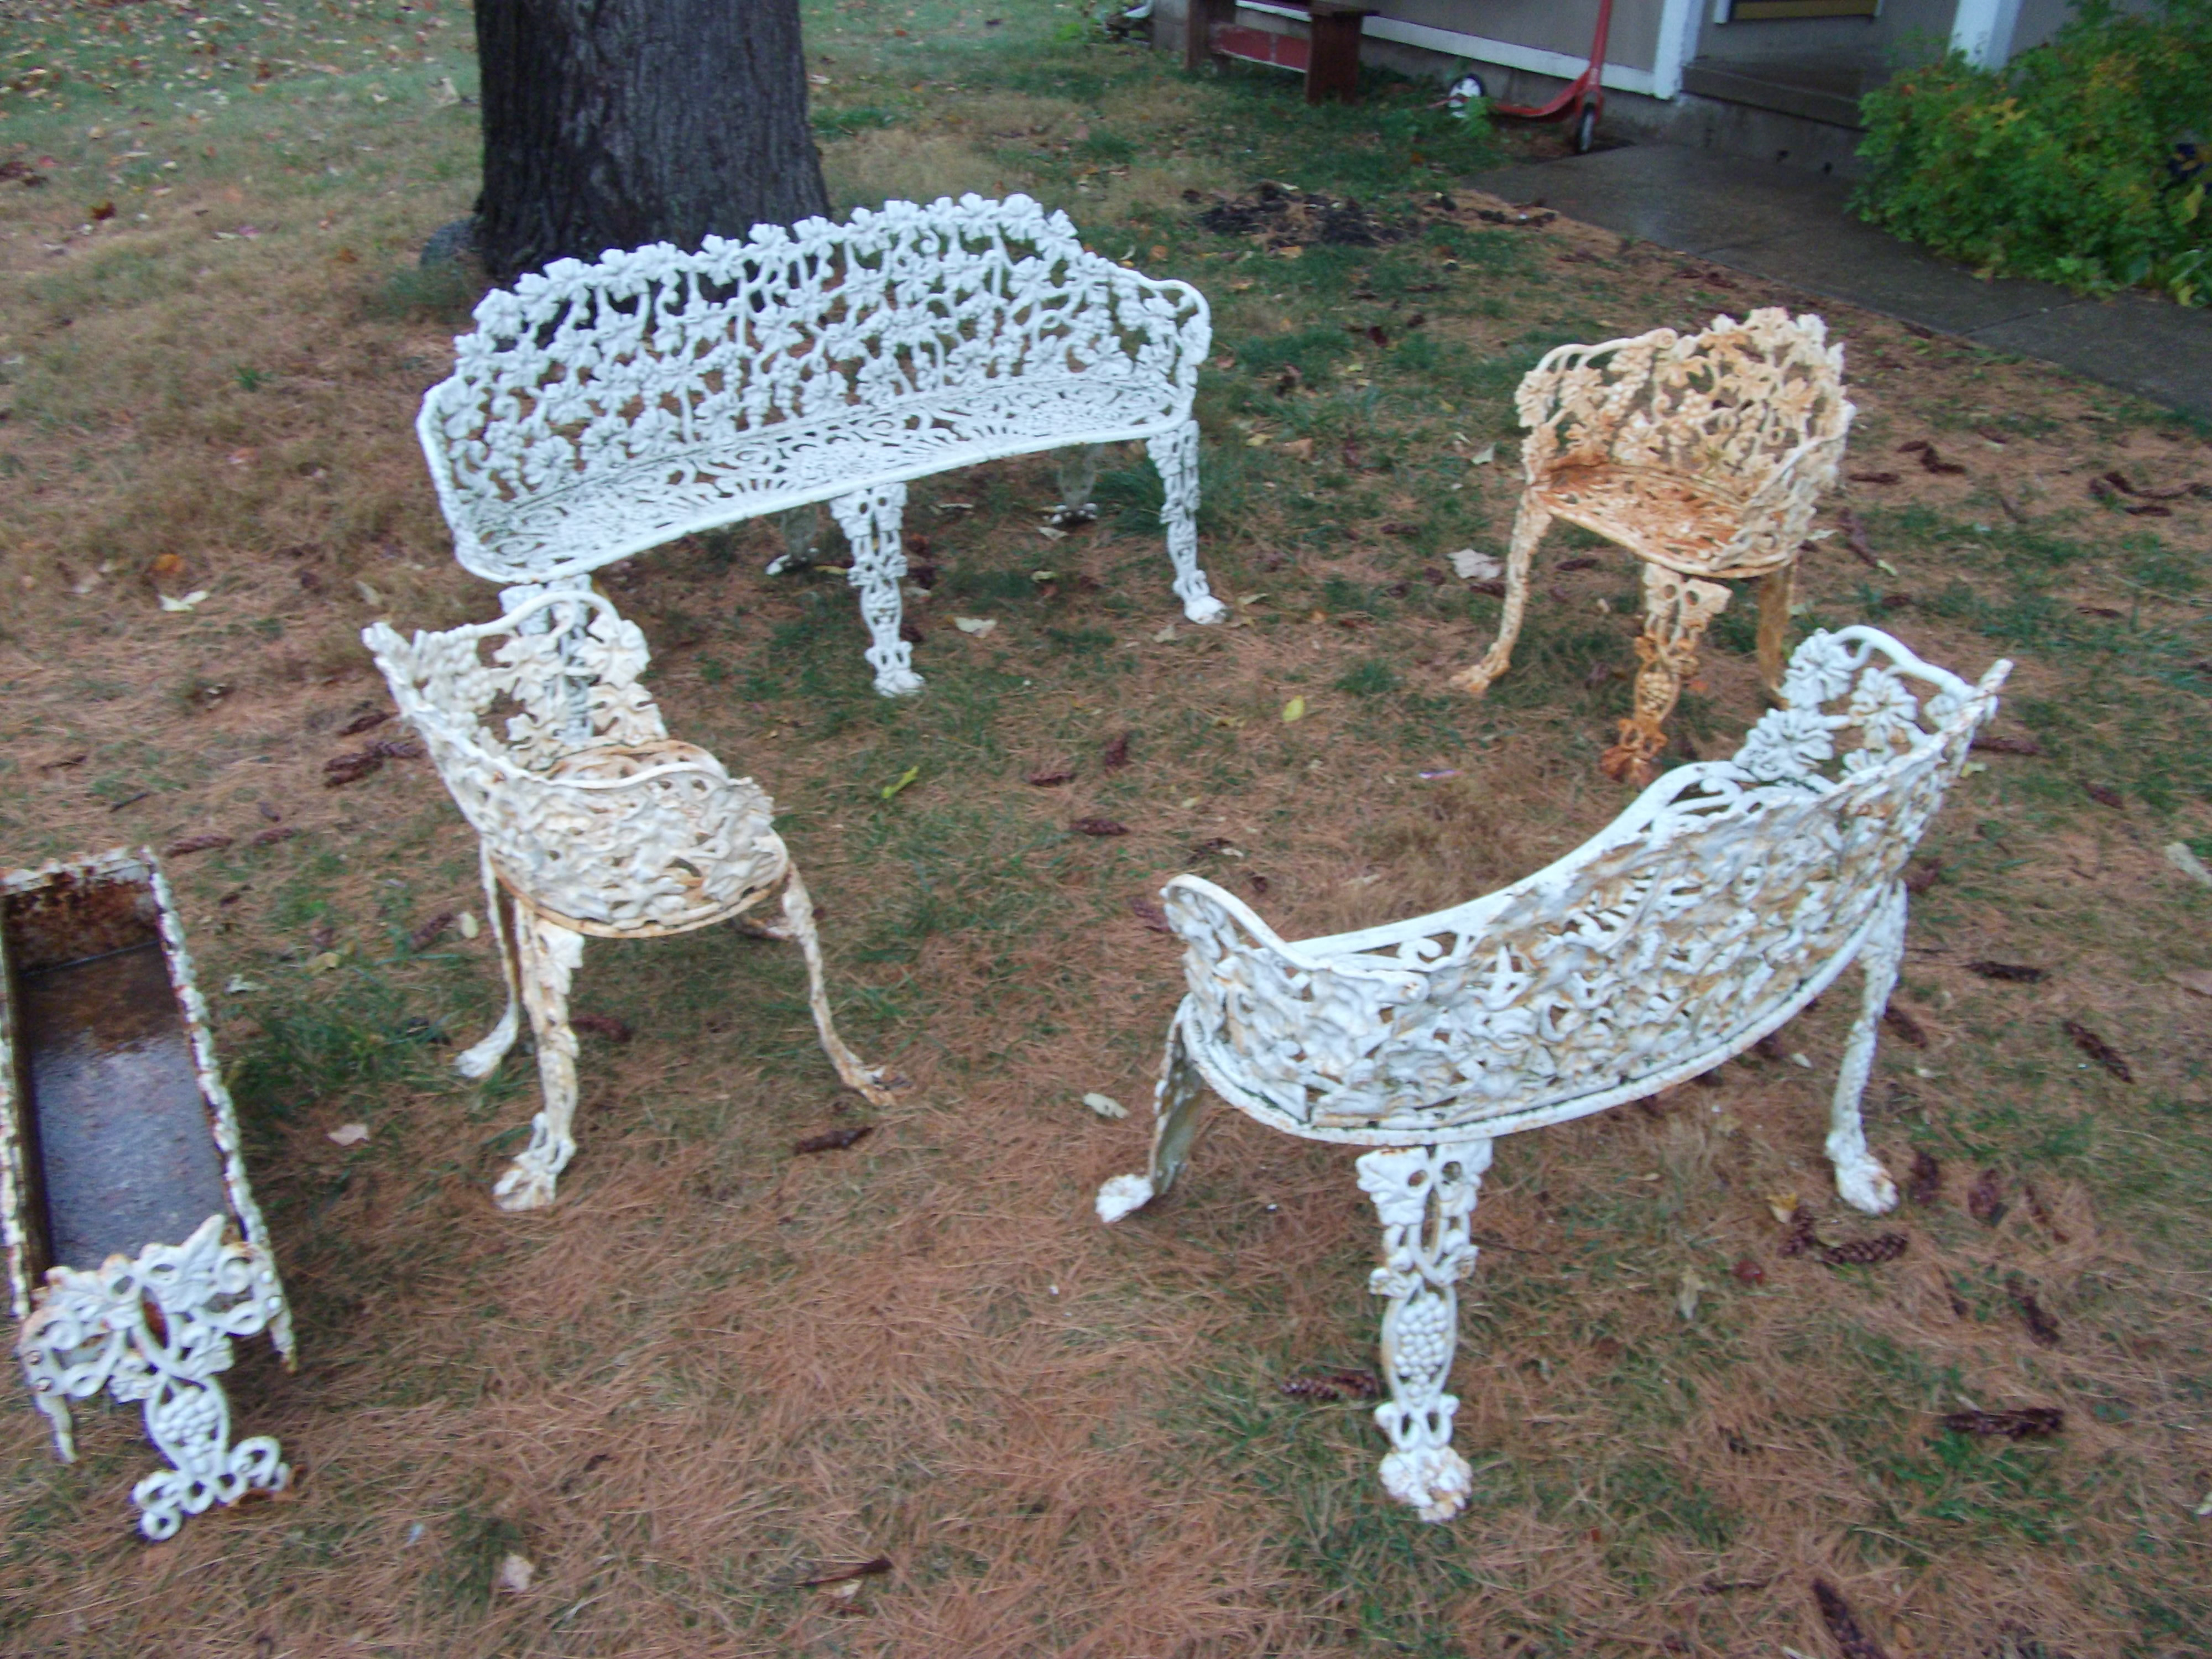 Best ideas about Cast Iron Patio Furniture
. Save or Pin Cast iron patio furniture For Sale Now.